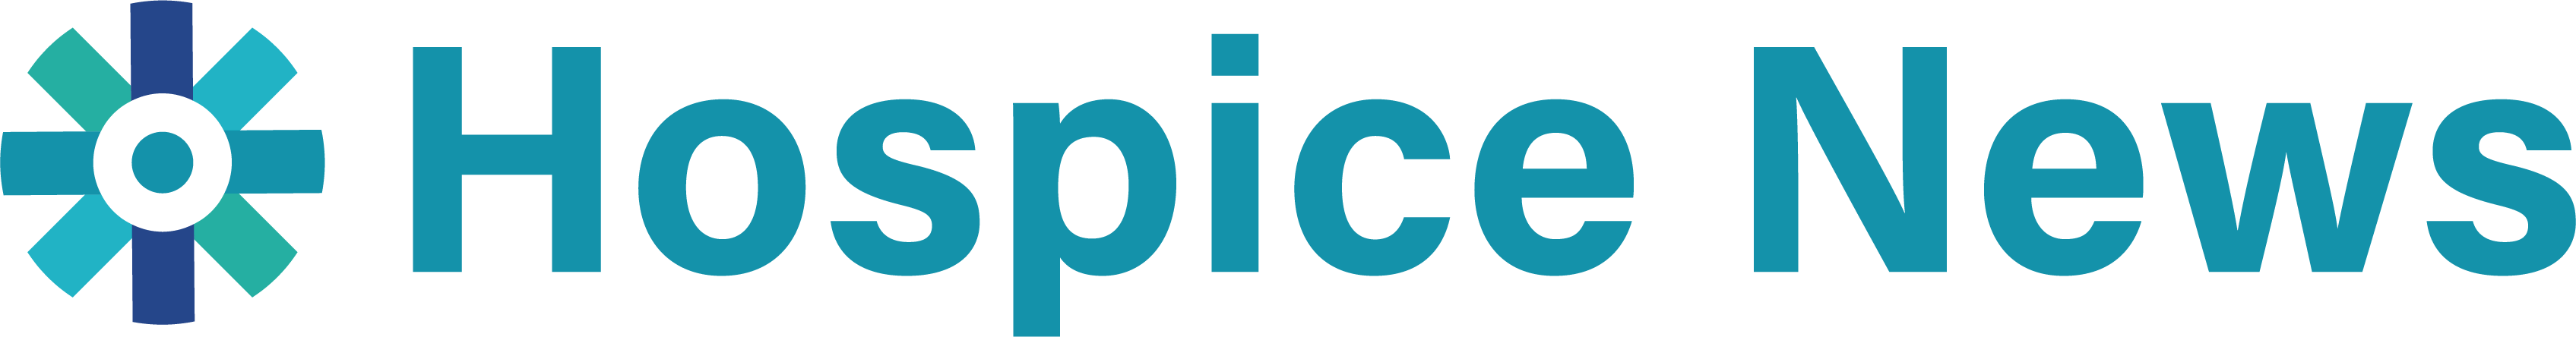 Hospice News Logo